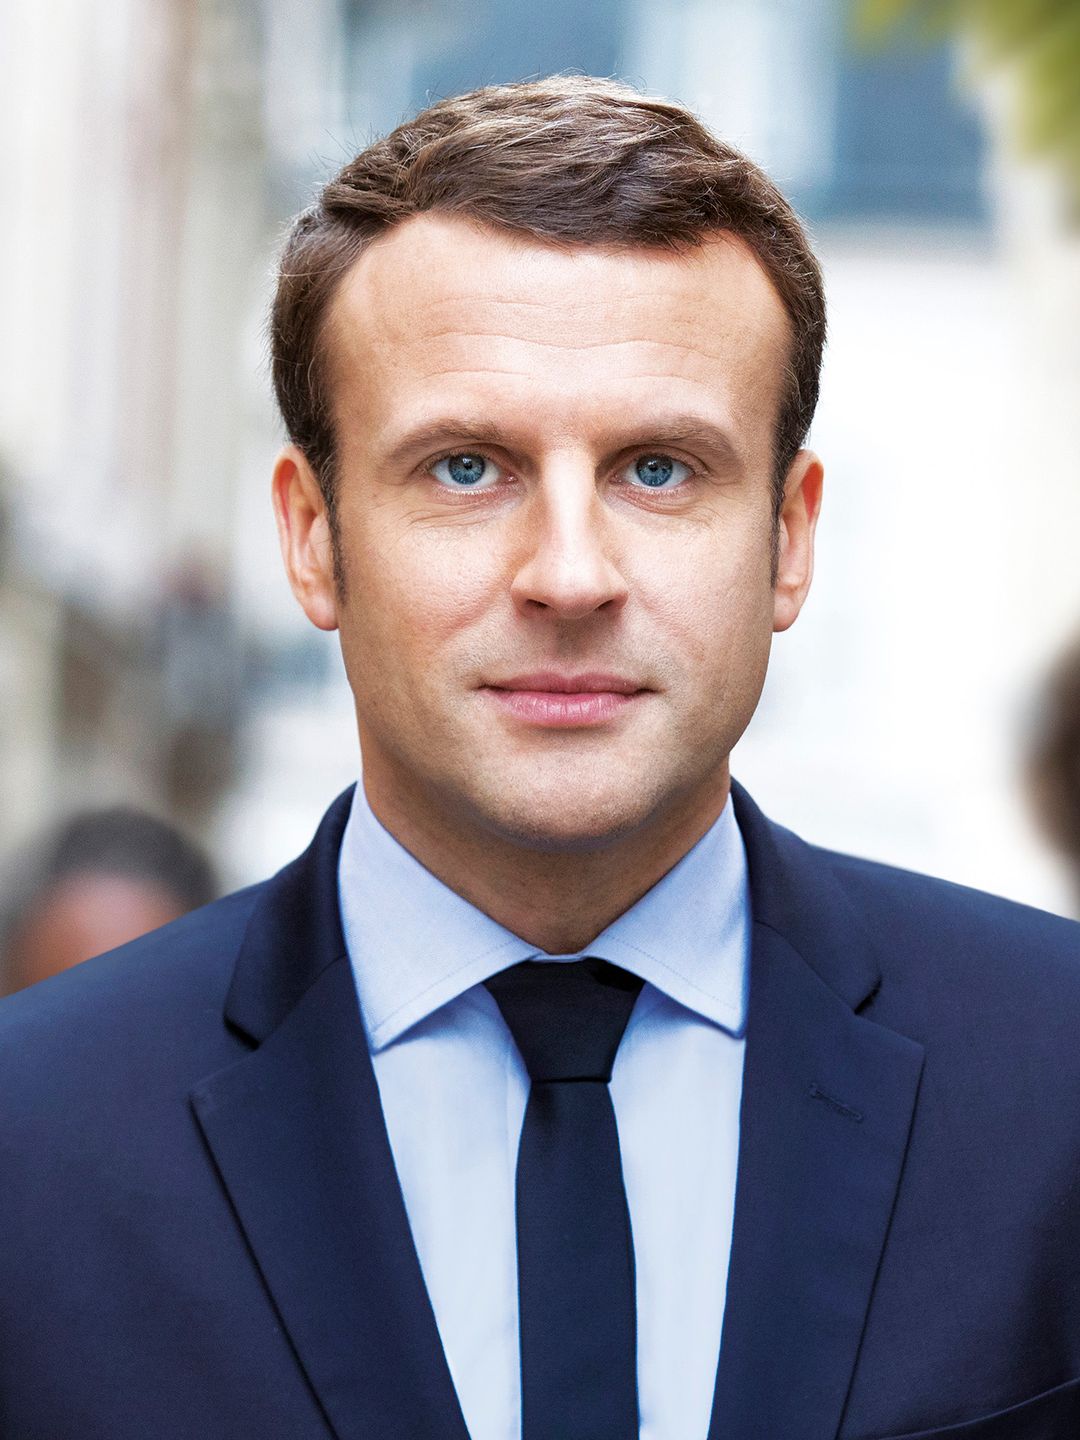 Emmanuel Macron young age